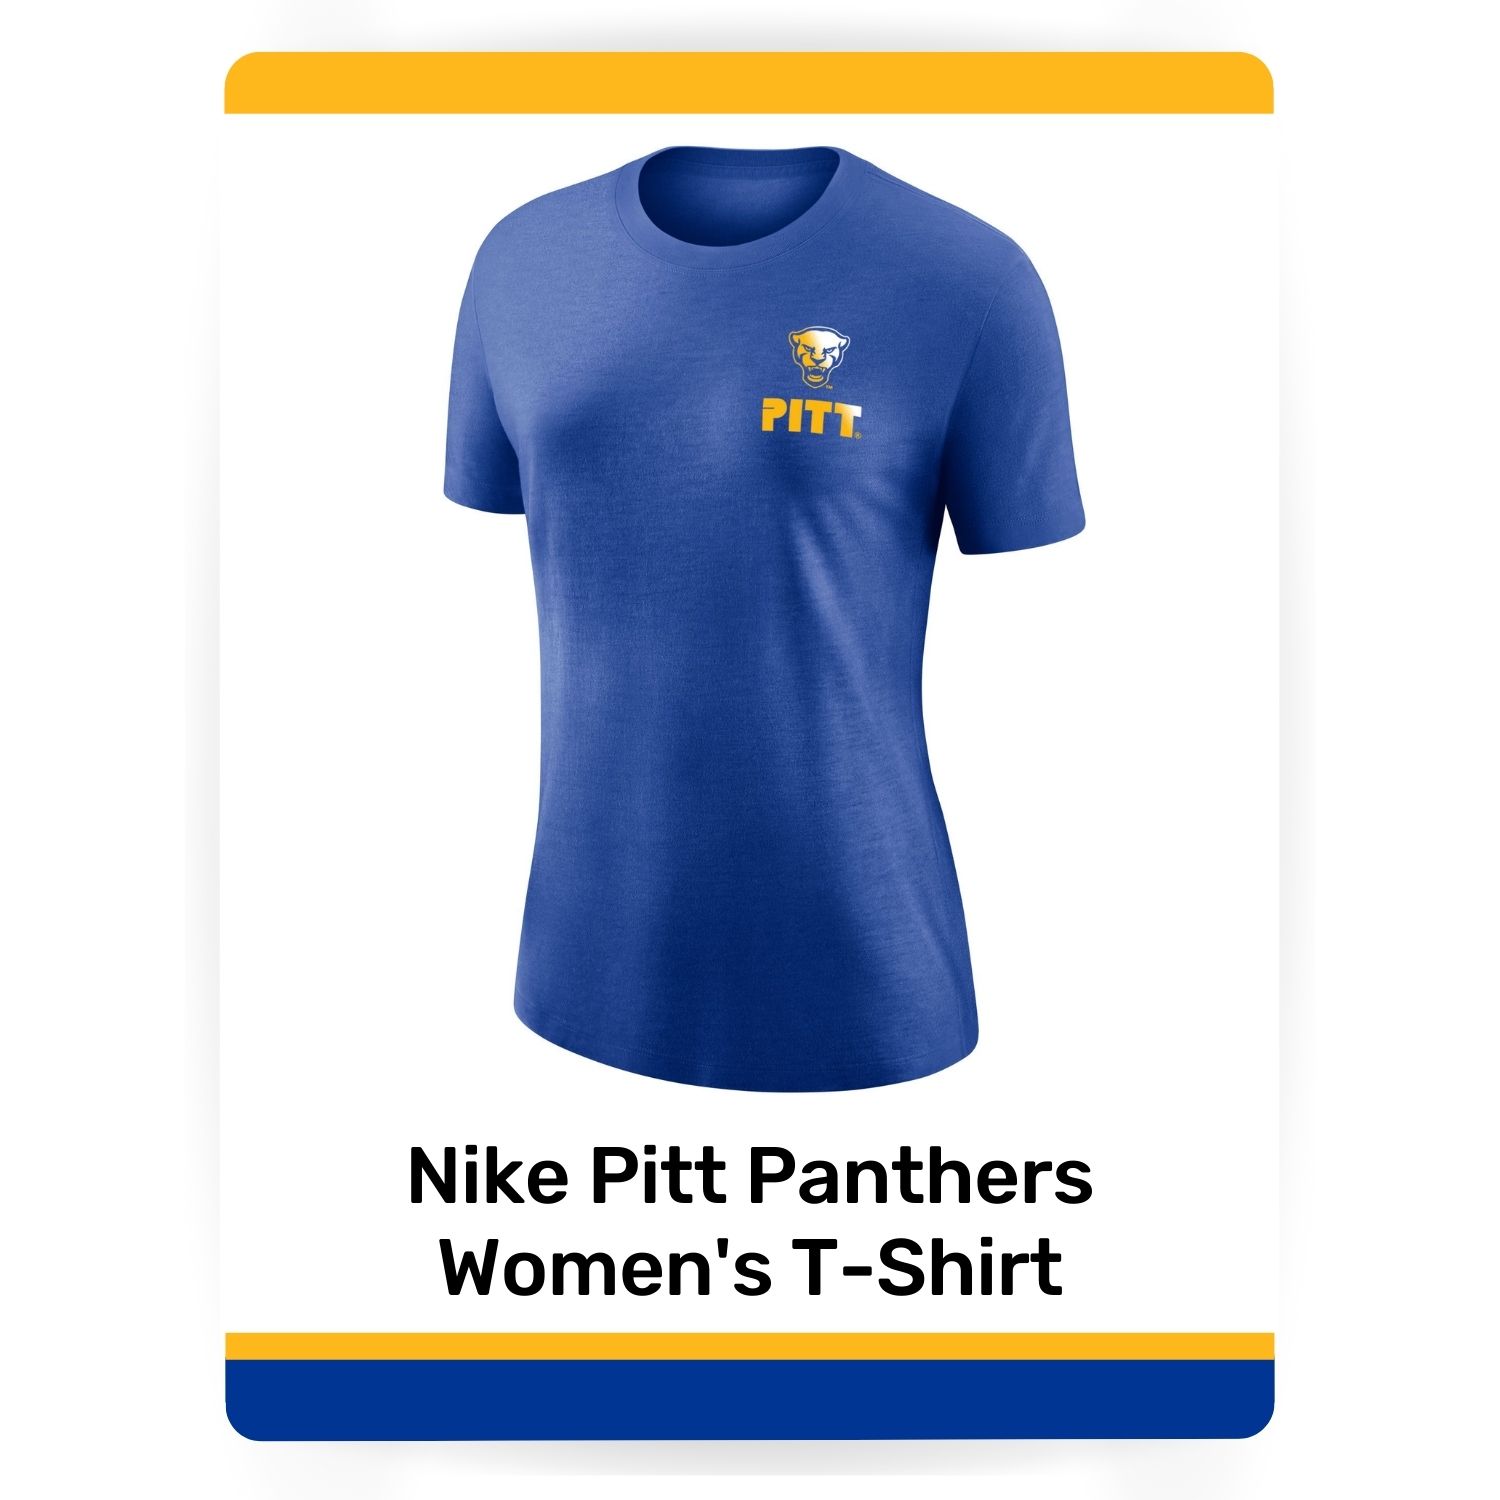 Nike Pitt Panthers Women's T-Shirt